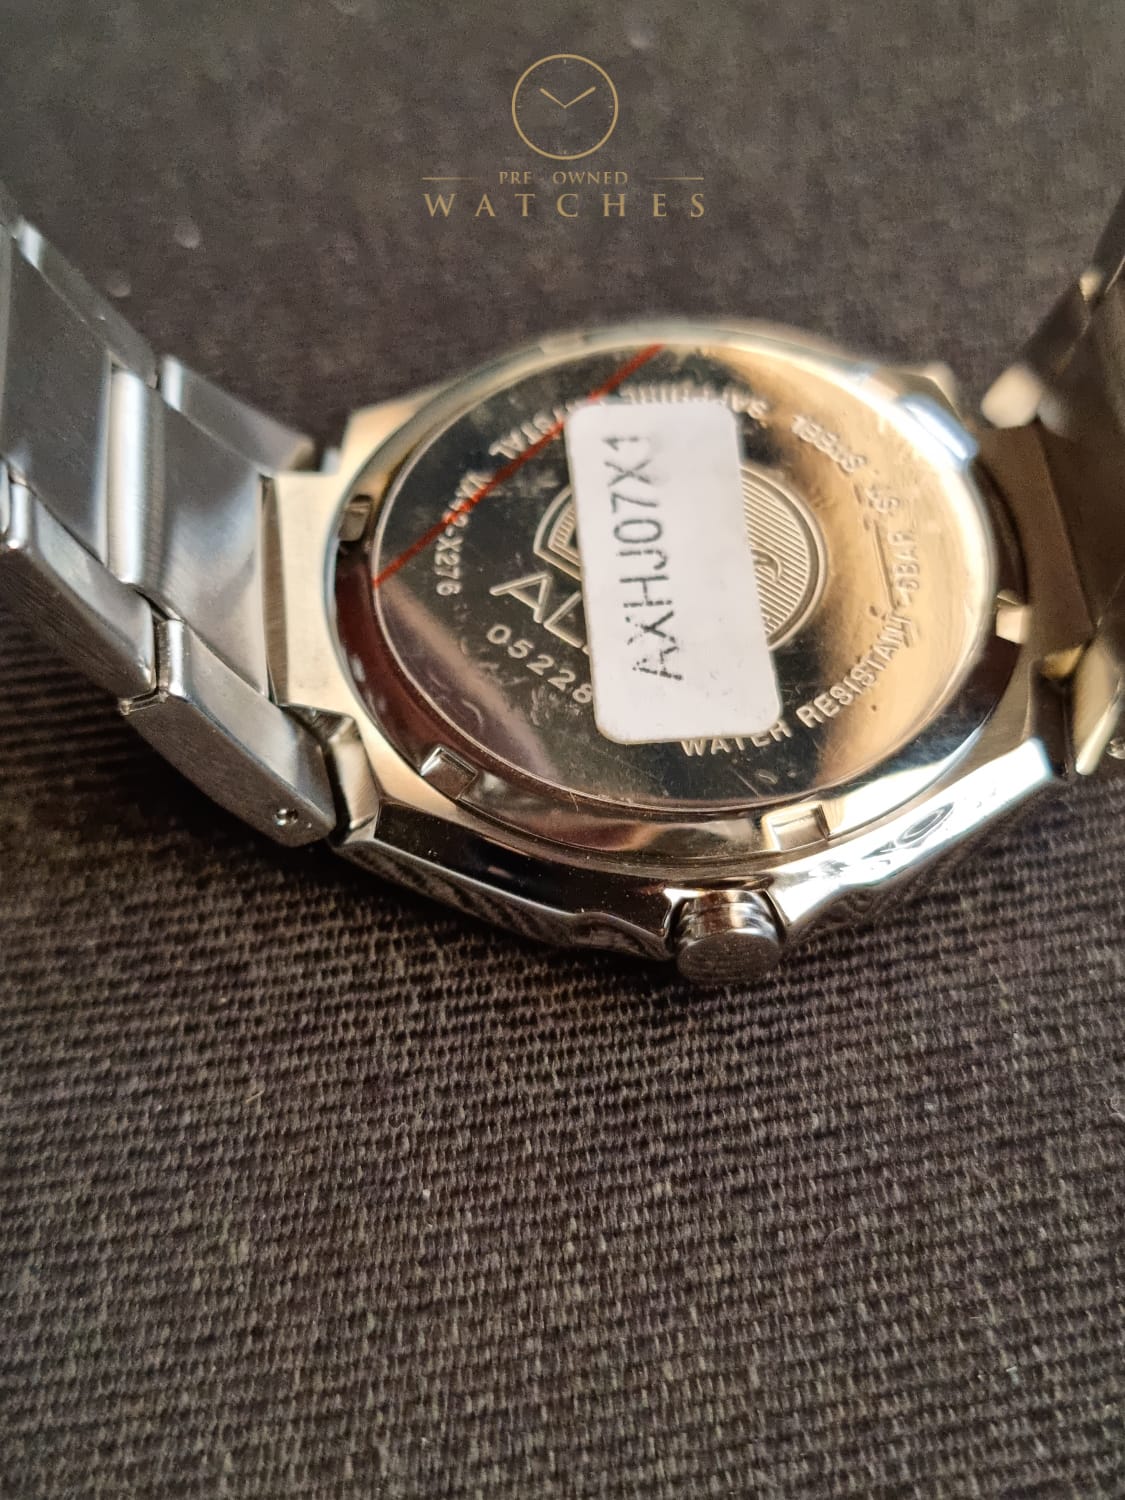 Alba Sub Brand Of Seiko Gents Watch Black Dial Date function Quartz Watch